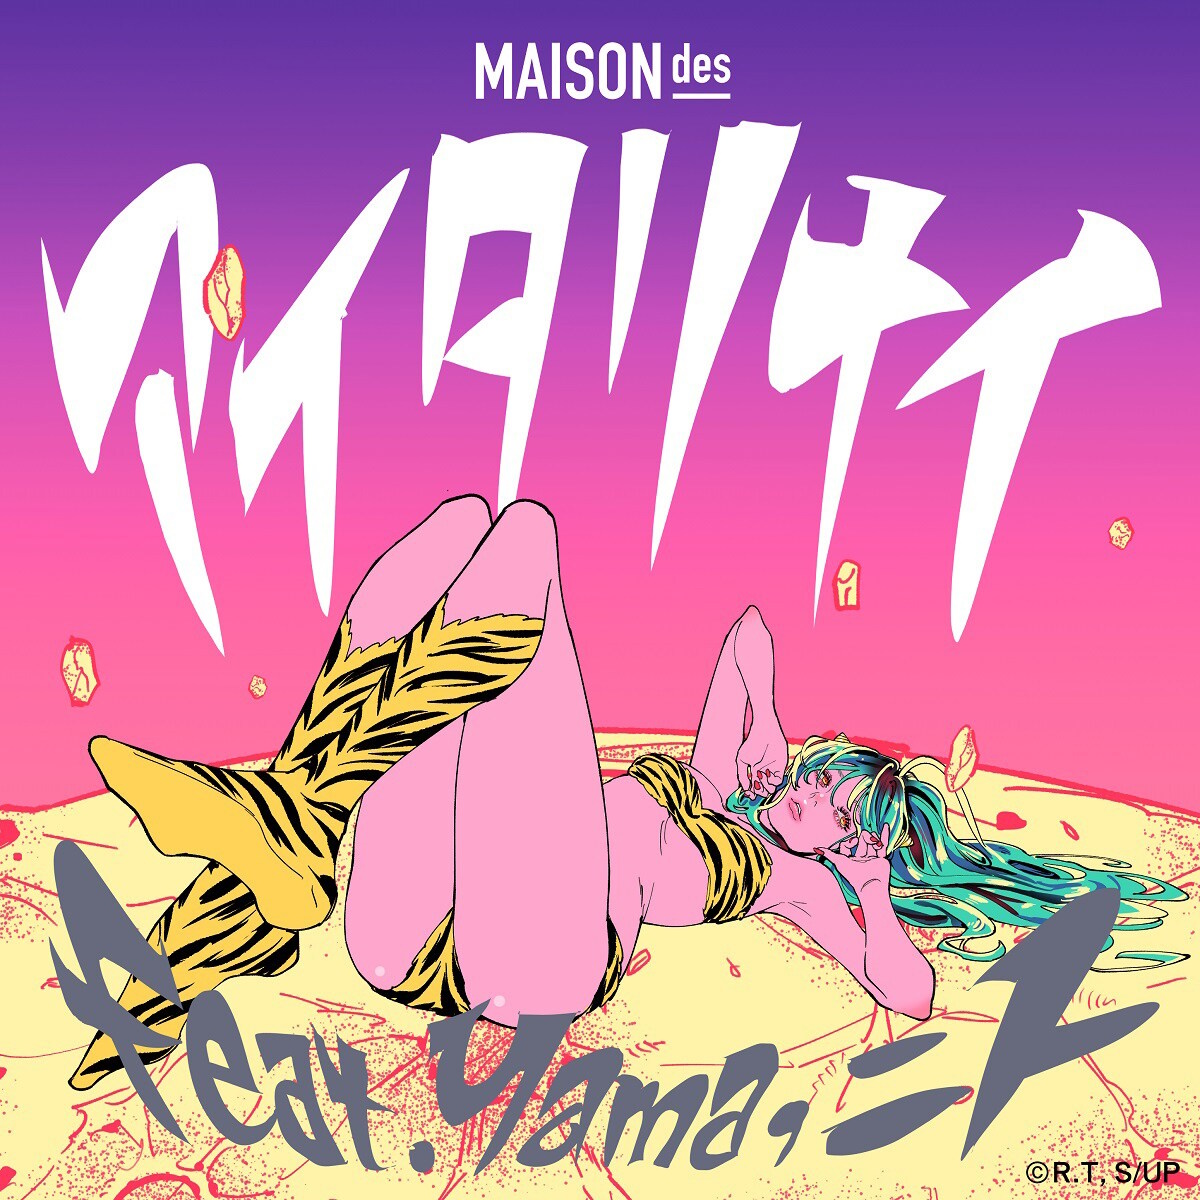 『MAISONdes - ヨワネハキ feat. 和ぬか, asmi』収録の『ヨワネハキ feat. 和ぬか, asmi』ジャケット